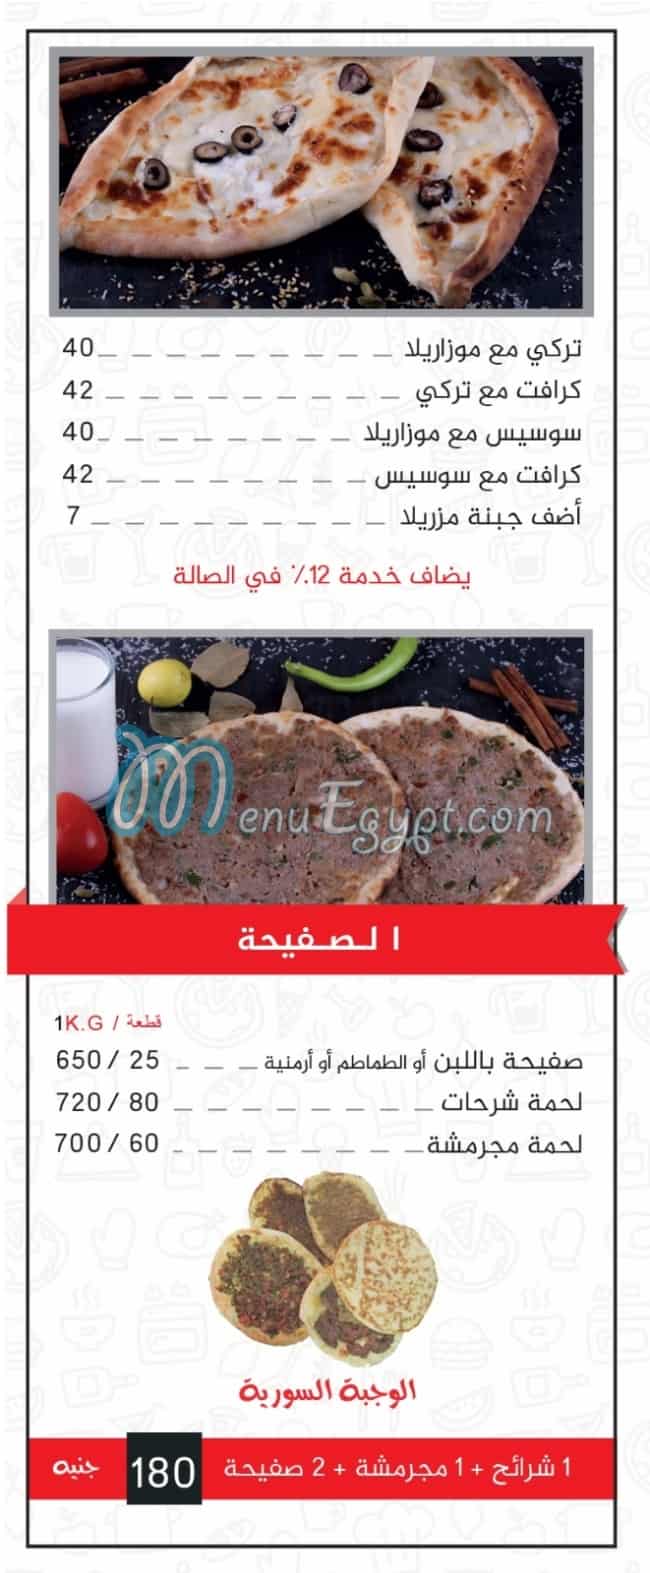 Al Aseel menu Egypt 1